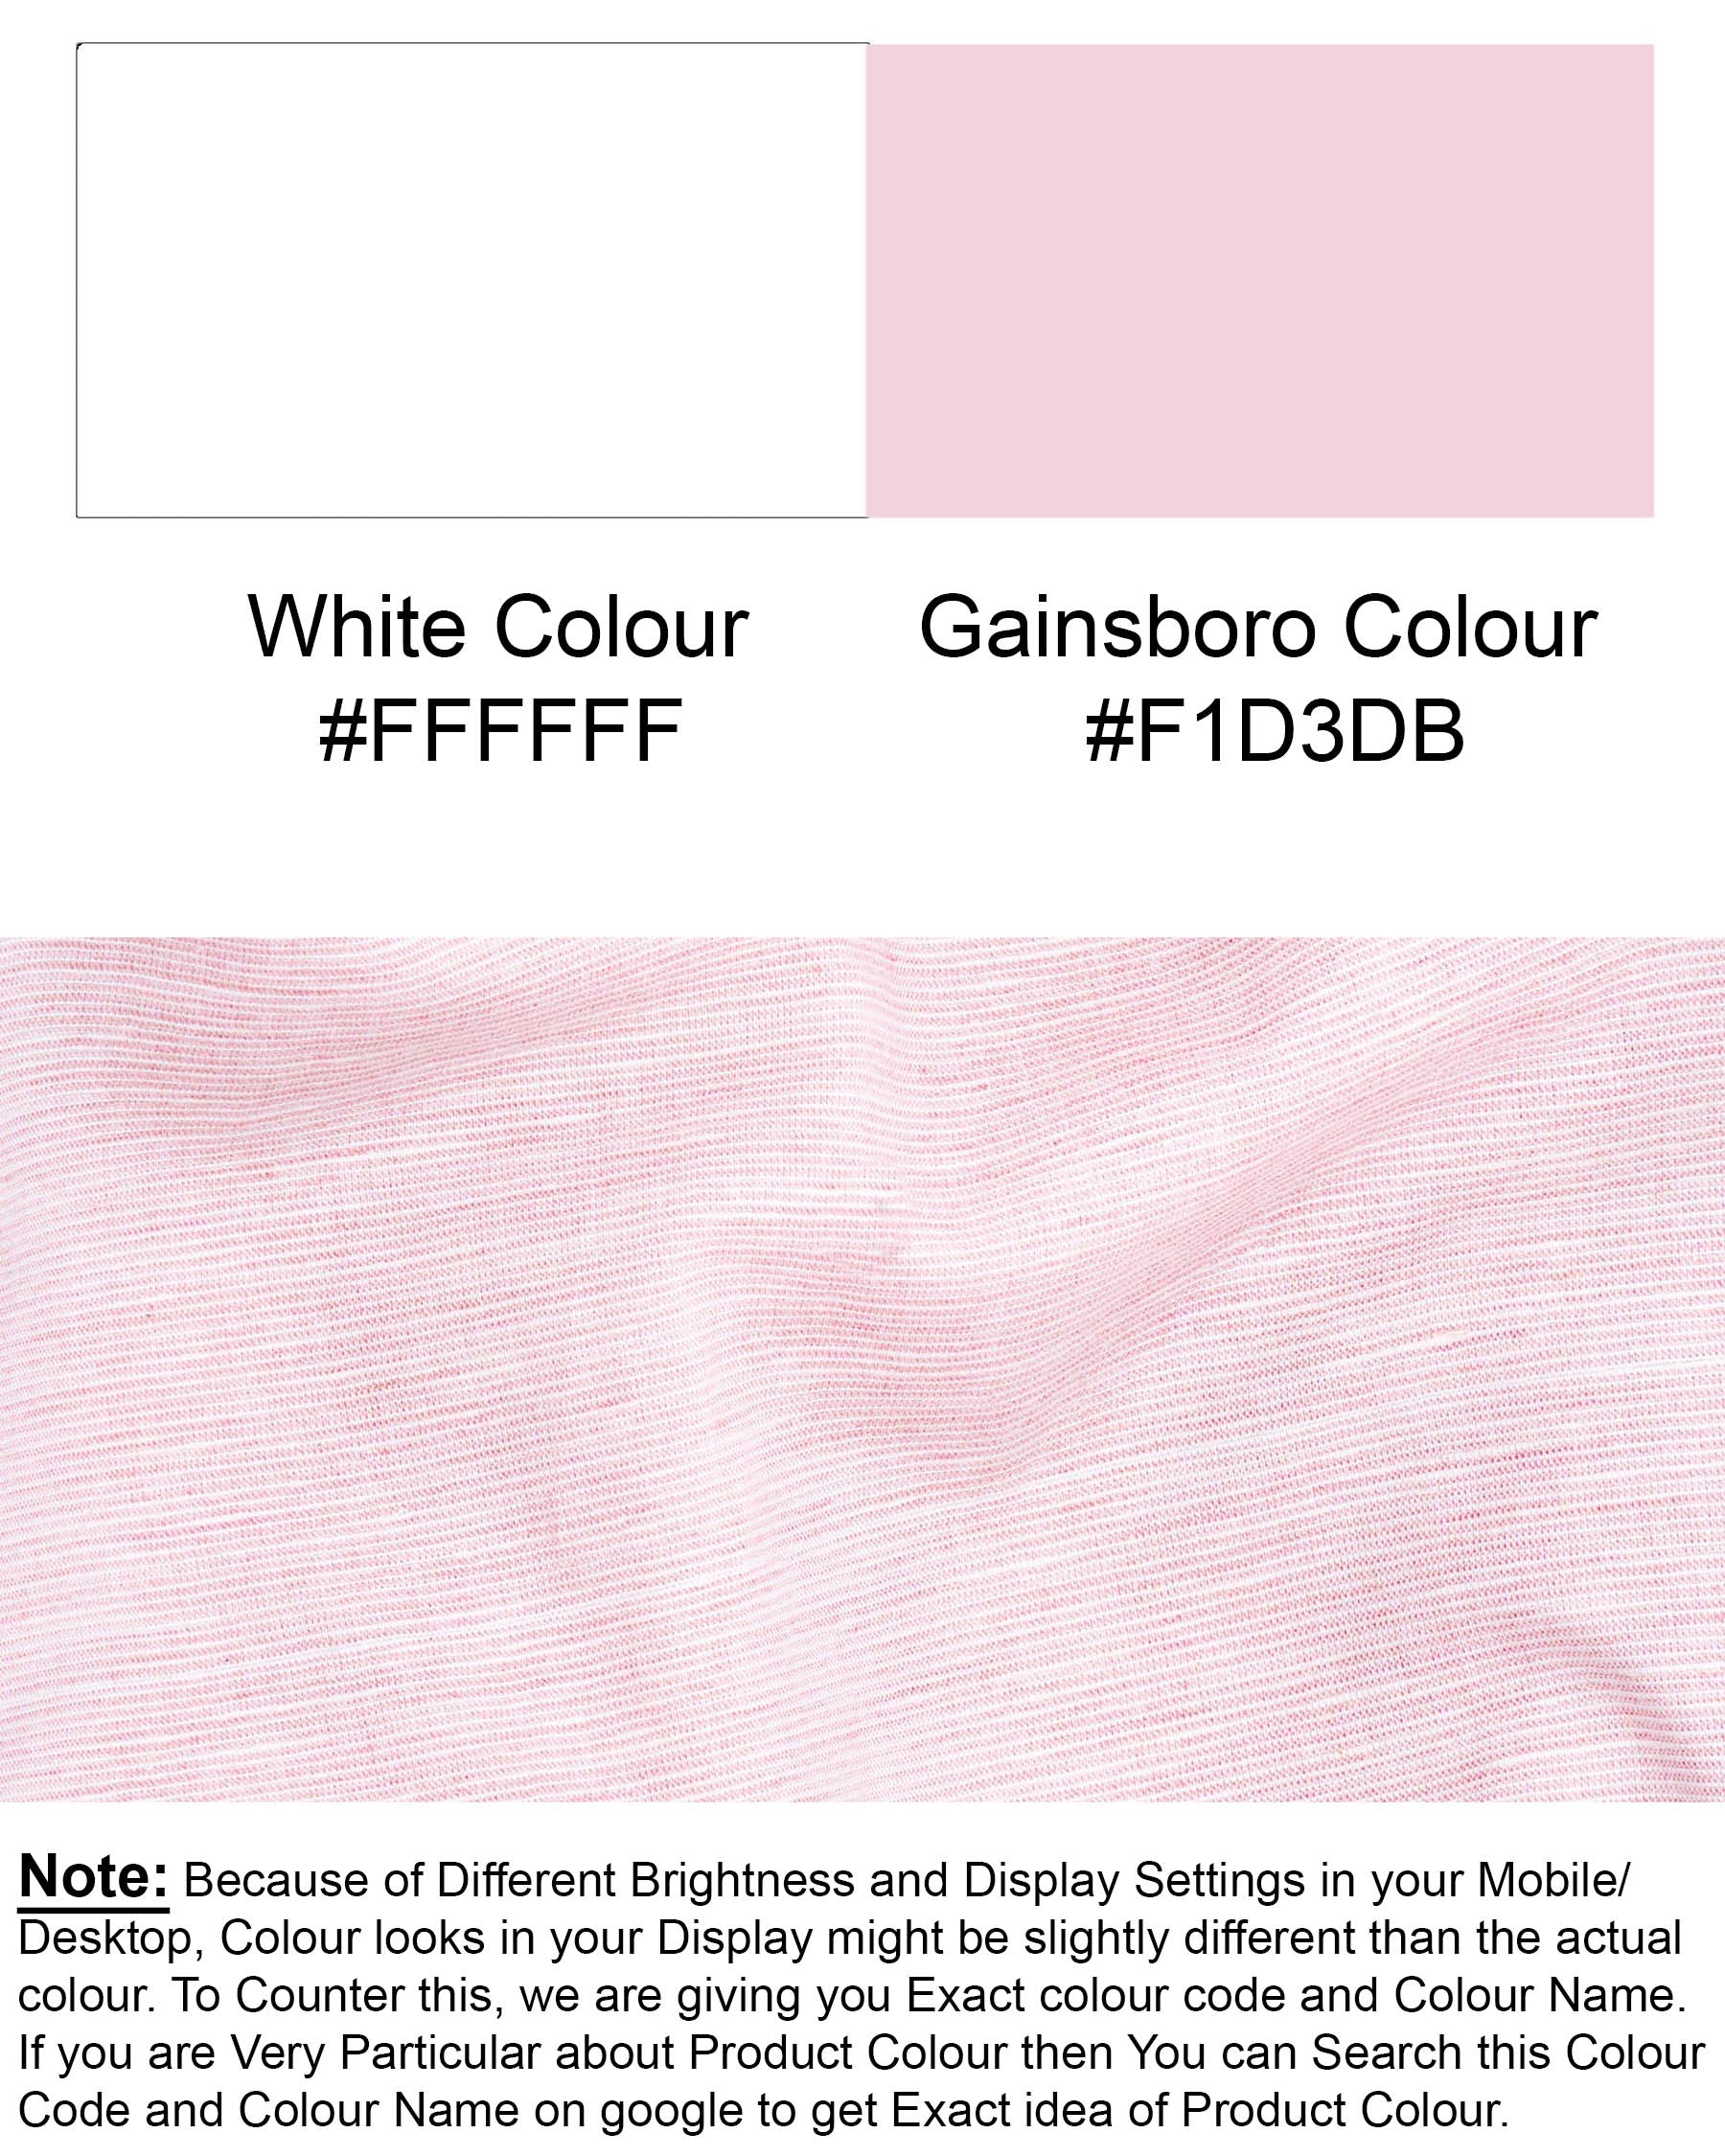 Gainsboro Pink and Bright White Chambray Shirt